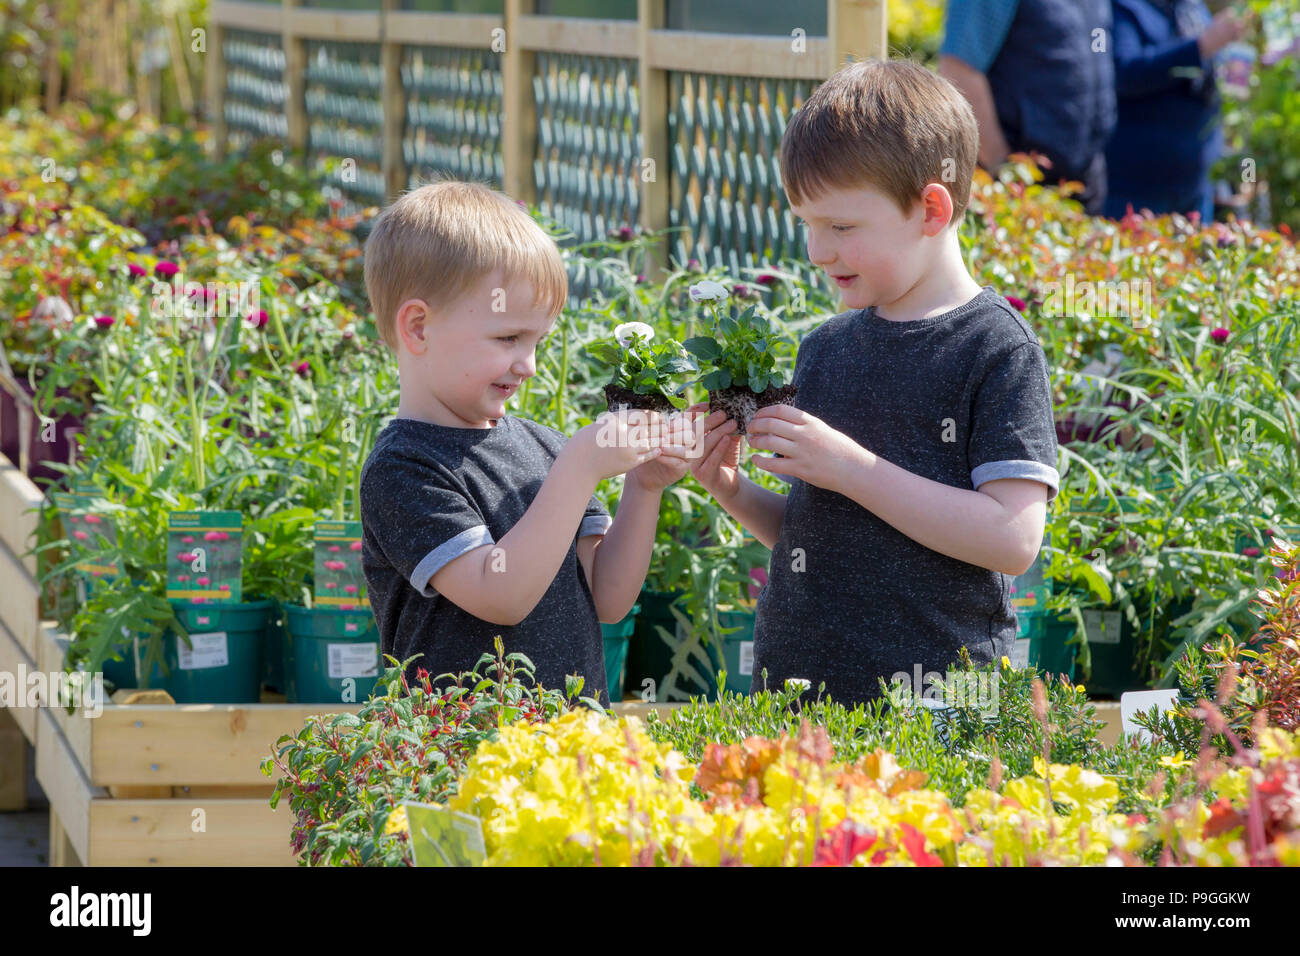 Children looking at plants in garden centre Stock Photo